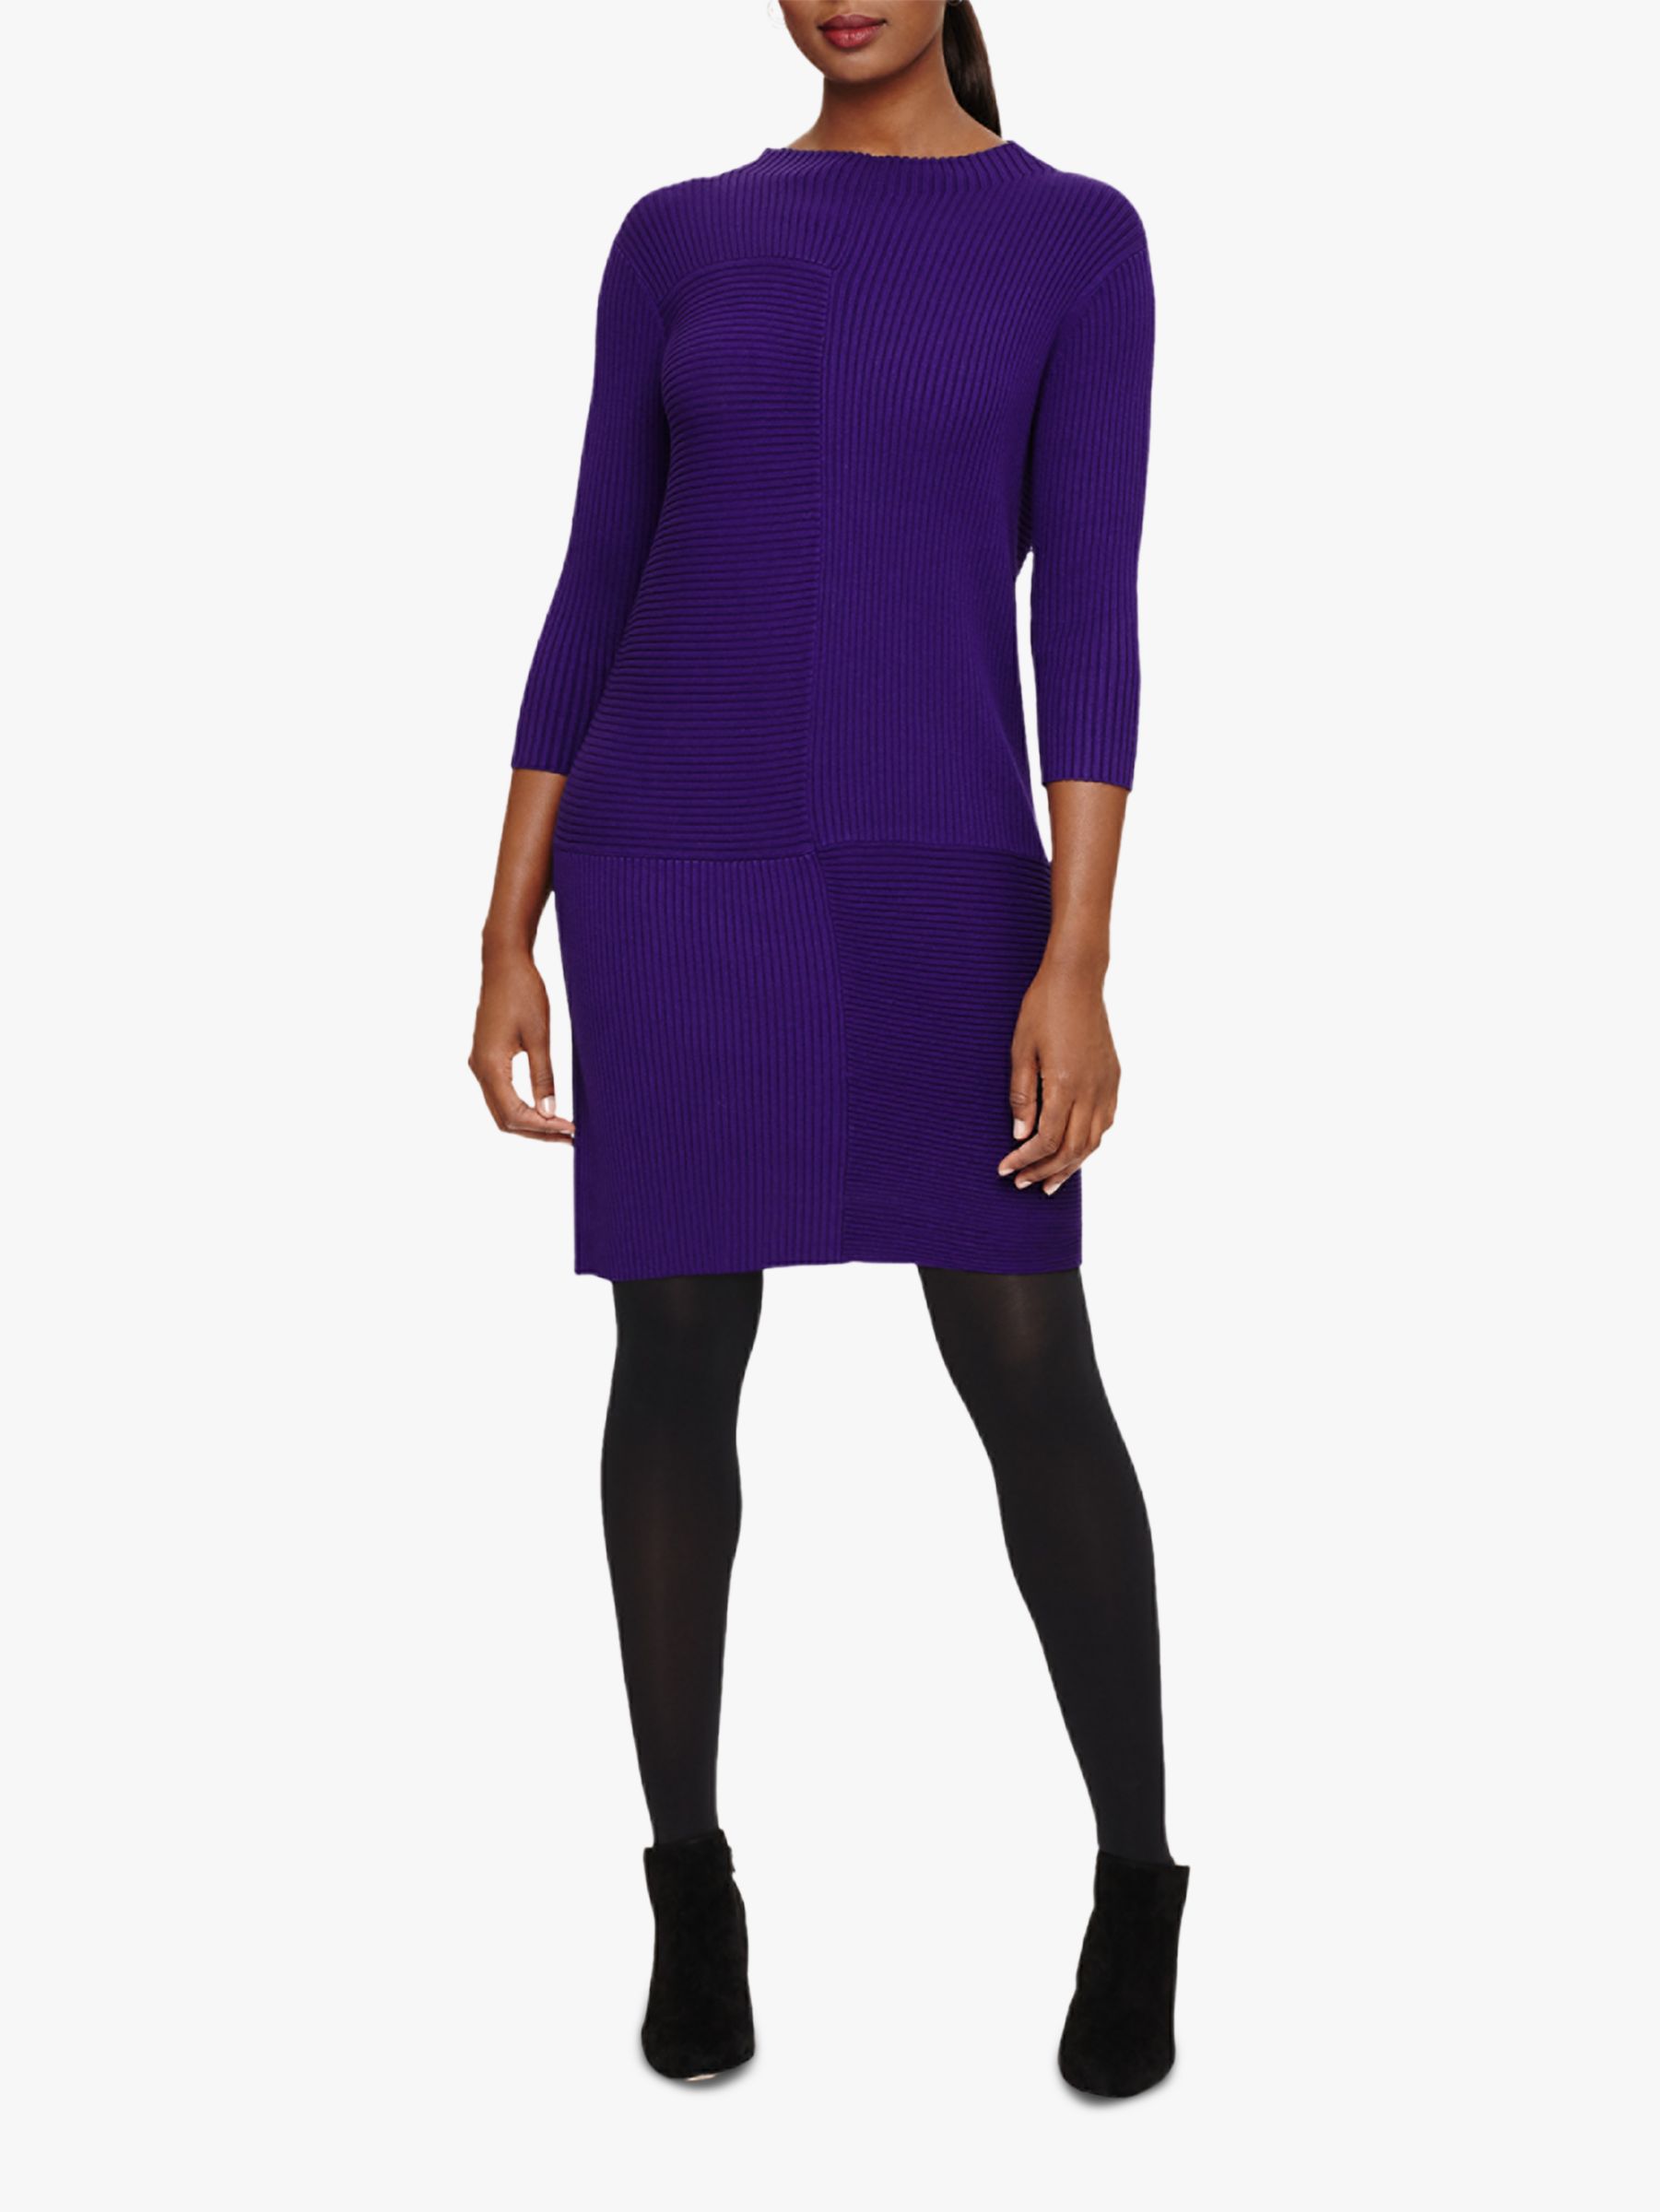 phase 8 purple dress